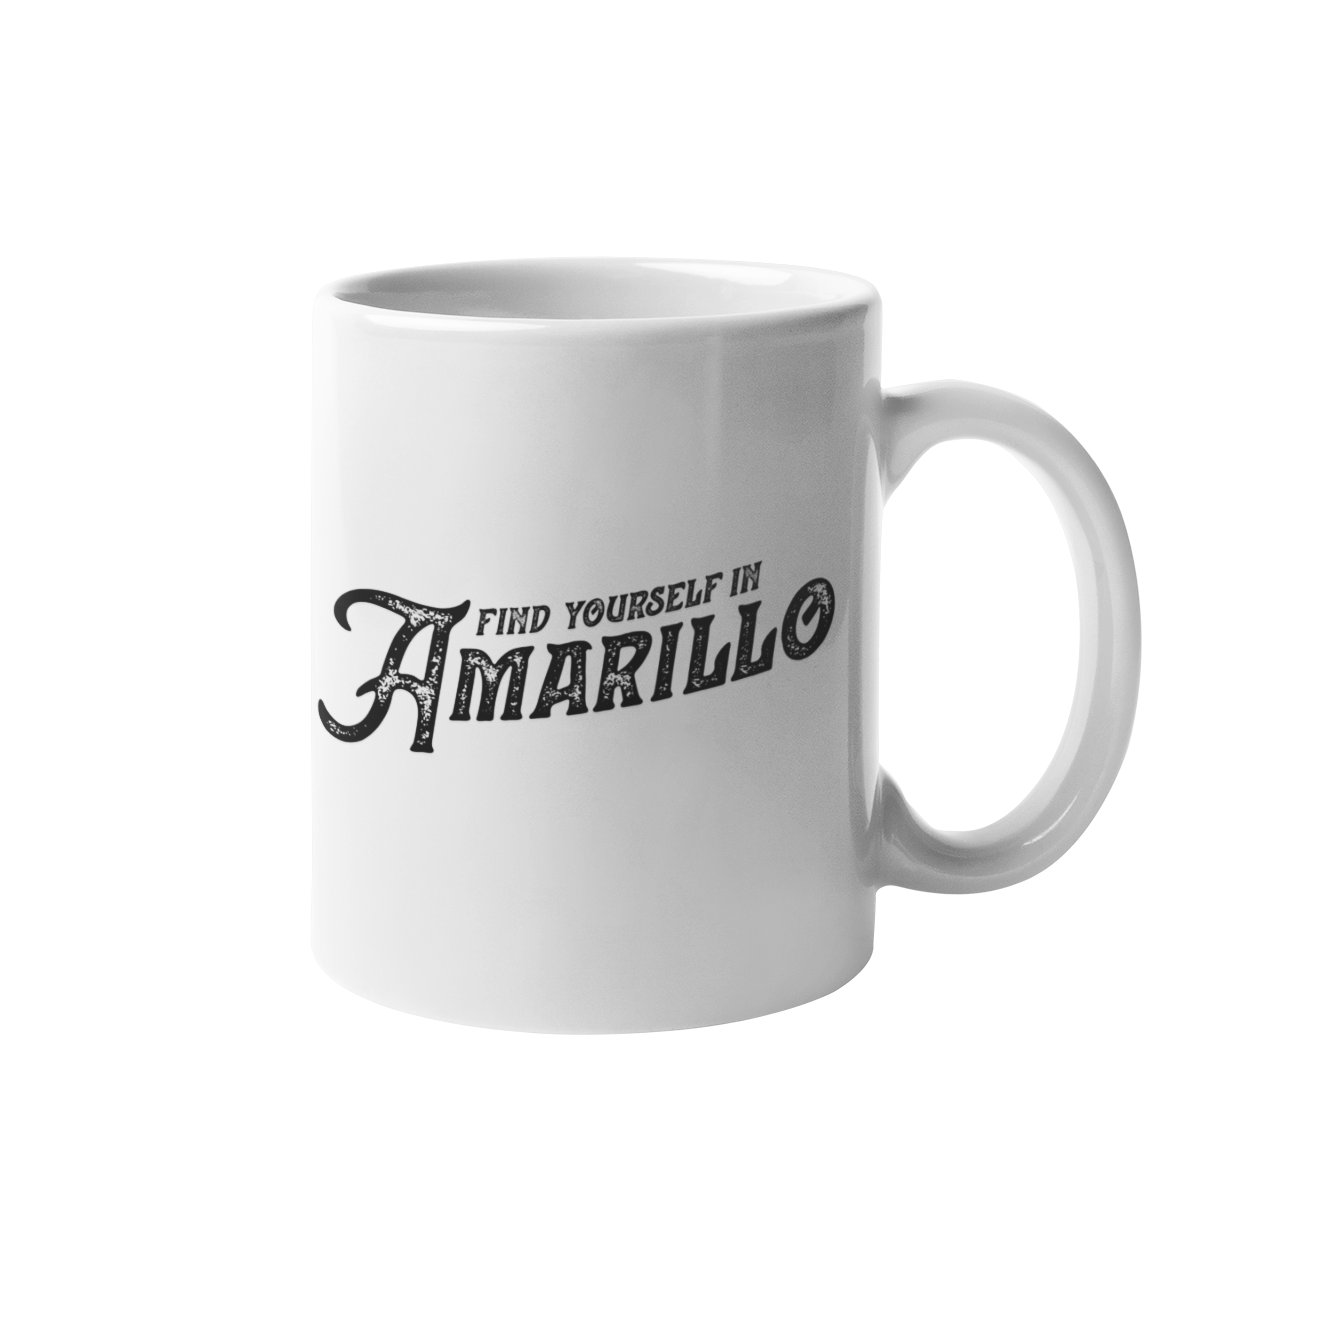 Amarillo Texas Mug - Find Yourself